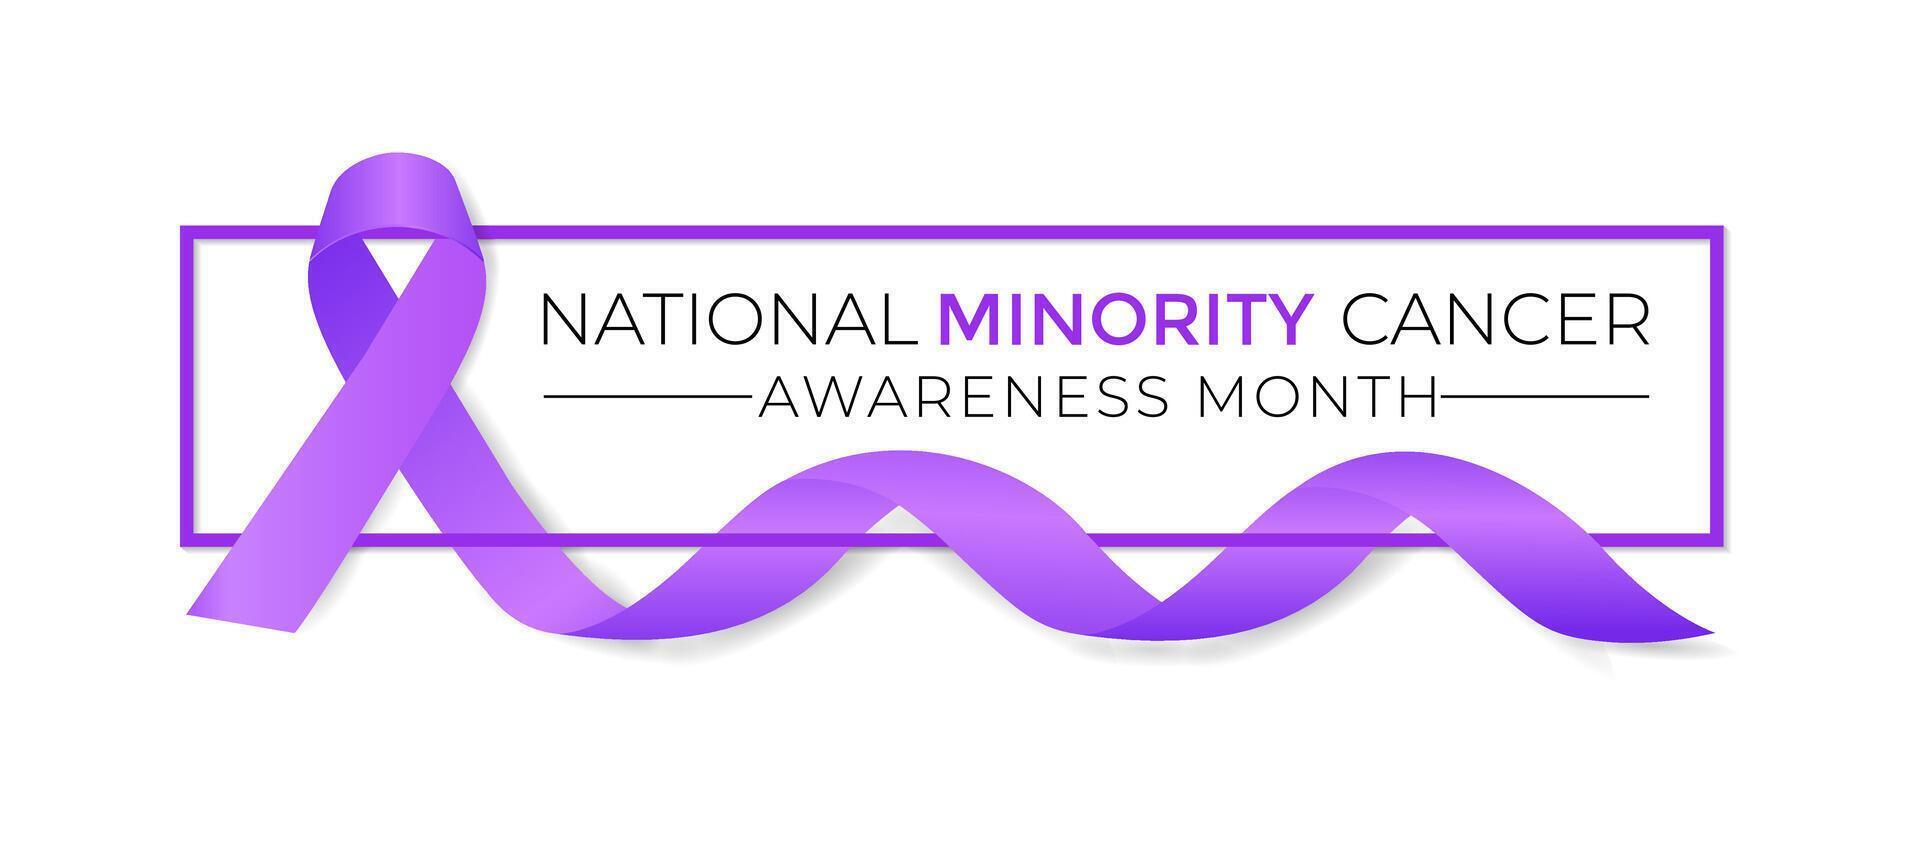 National Minority Cancer awareness Month of April. Poster , banner design template Vector illustration.